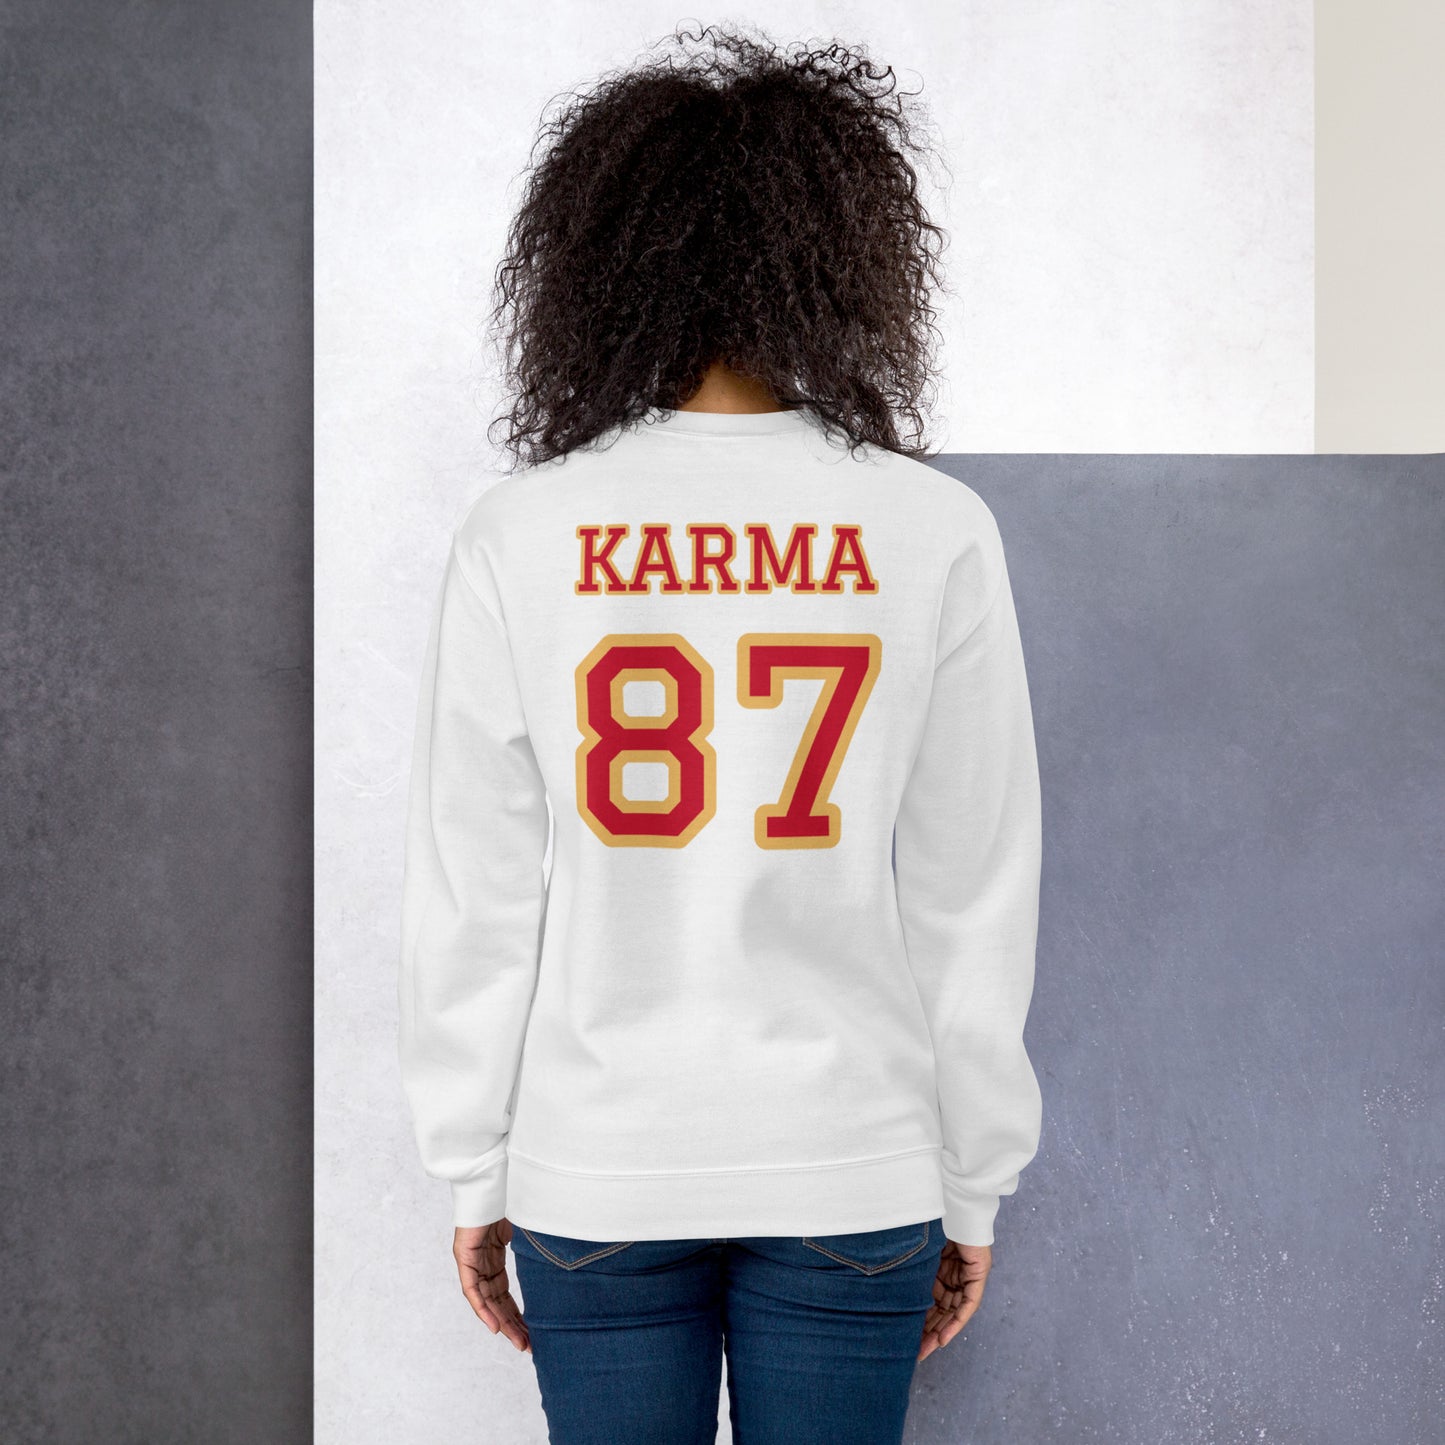 KARMA 87 - Chiefs Colors - Unisex Sweatshirt